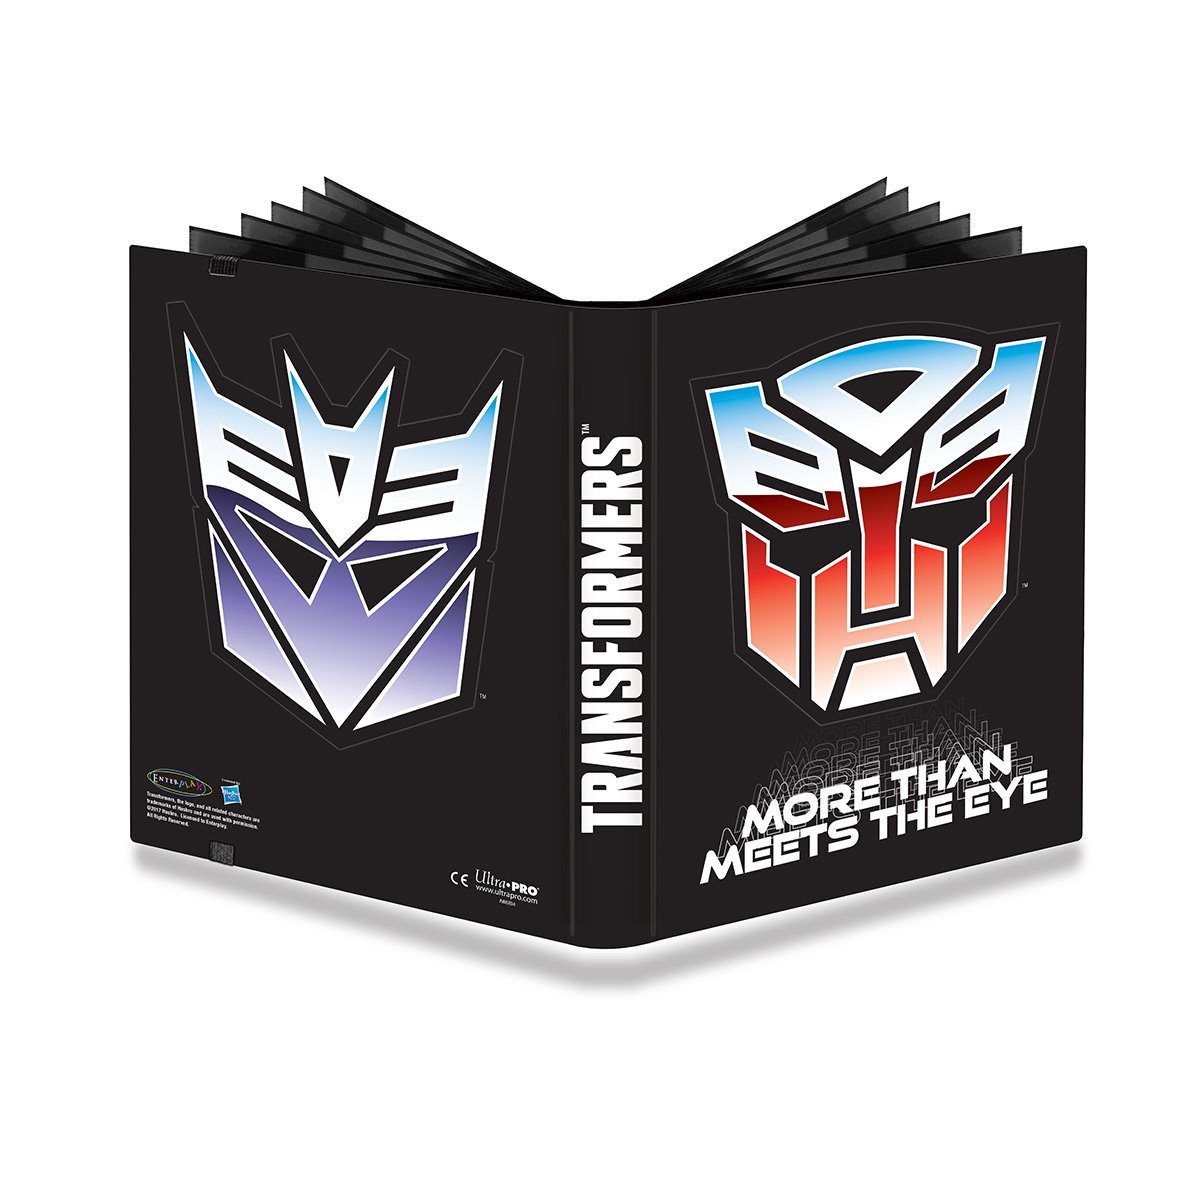 Carpeta UltraPRO de 9 bolsillos Transformers 